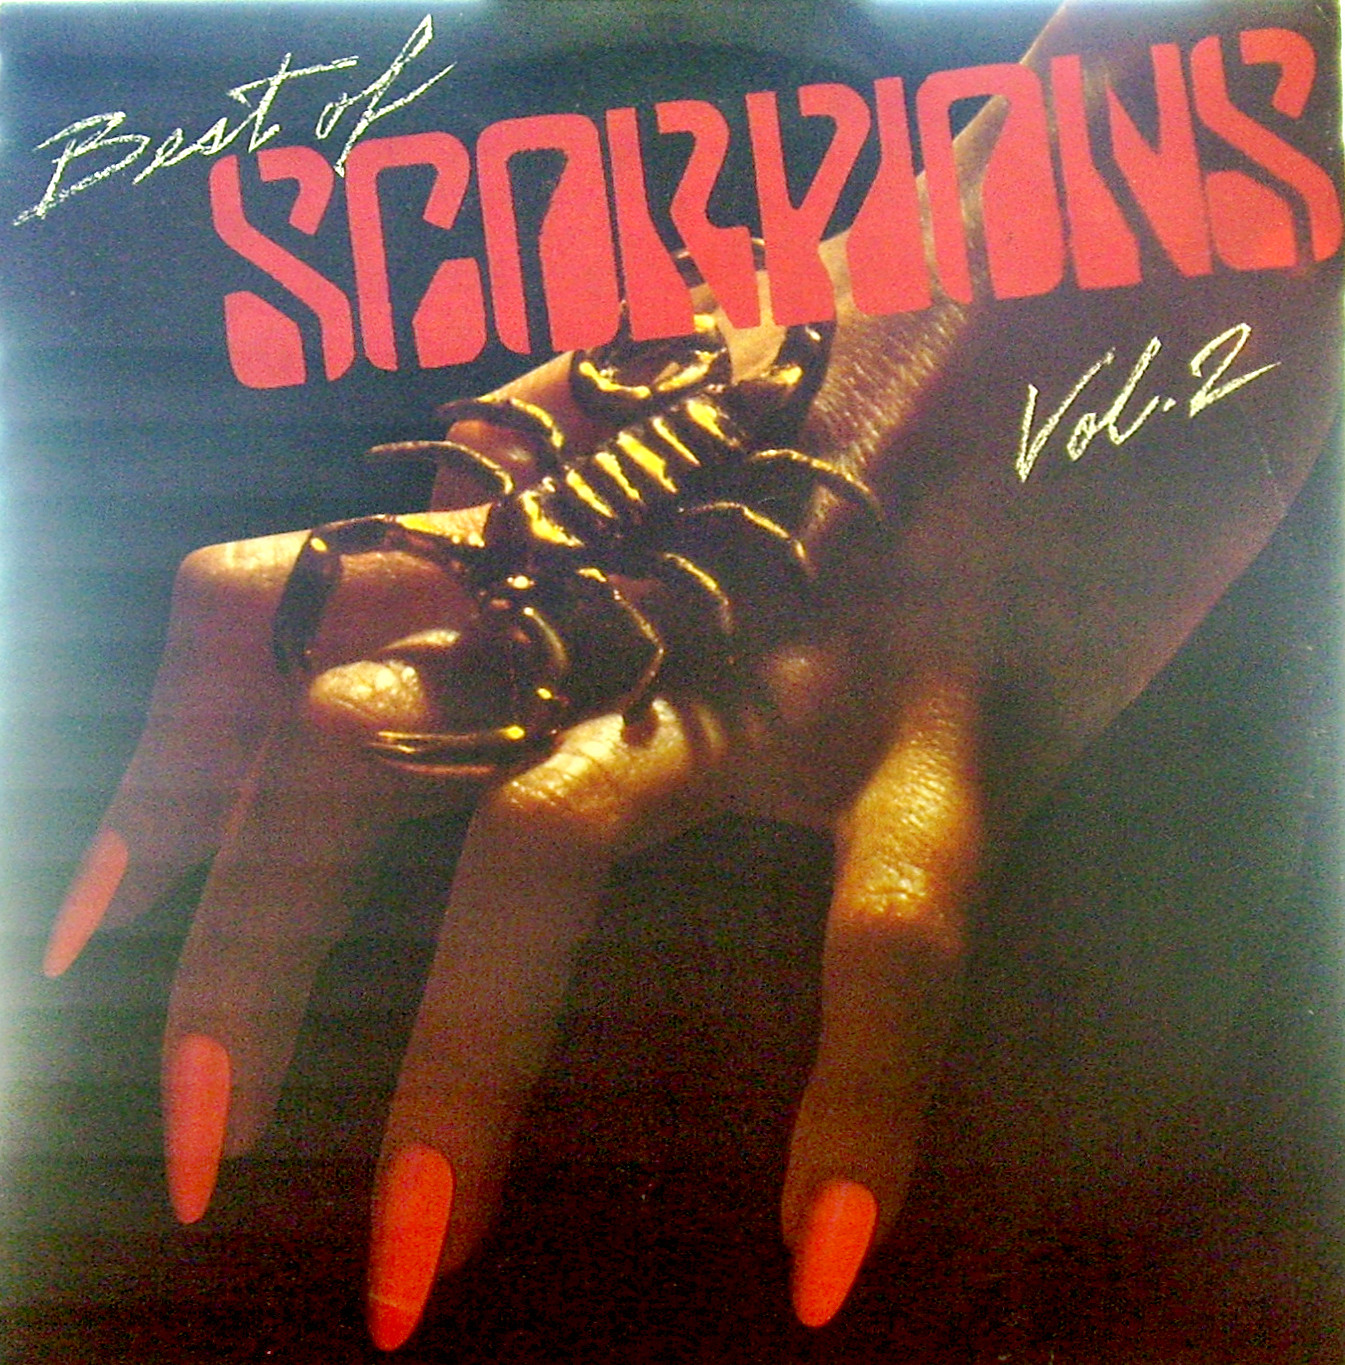 Scorpions flac. Обложки группы скорпионс. Группа Scorpions на обложке пластинки. Scorpions best обложка. Группа скорпионс альбомы.